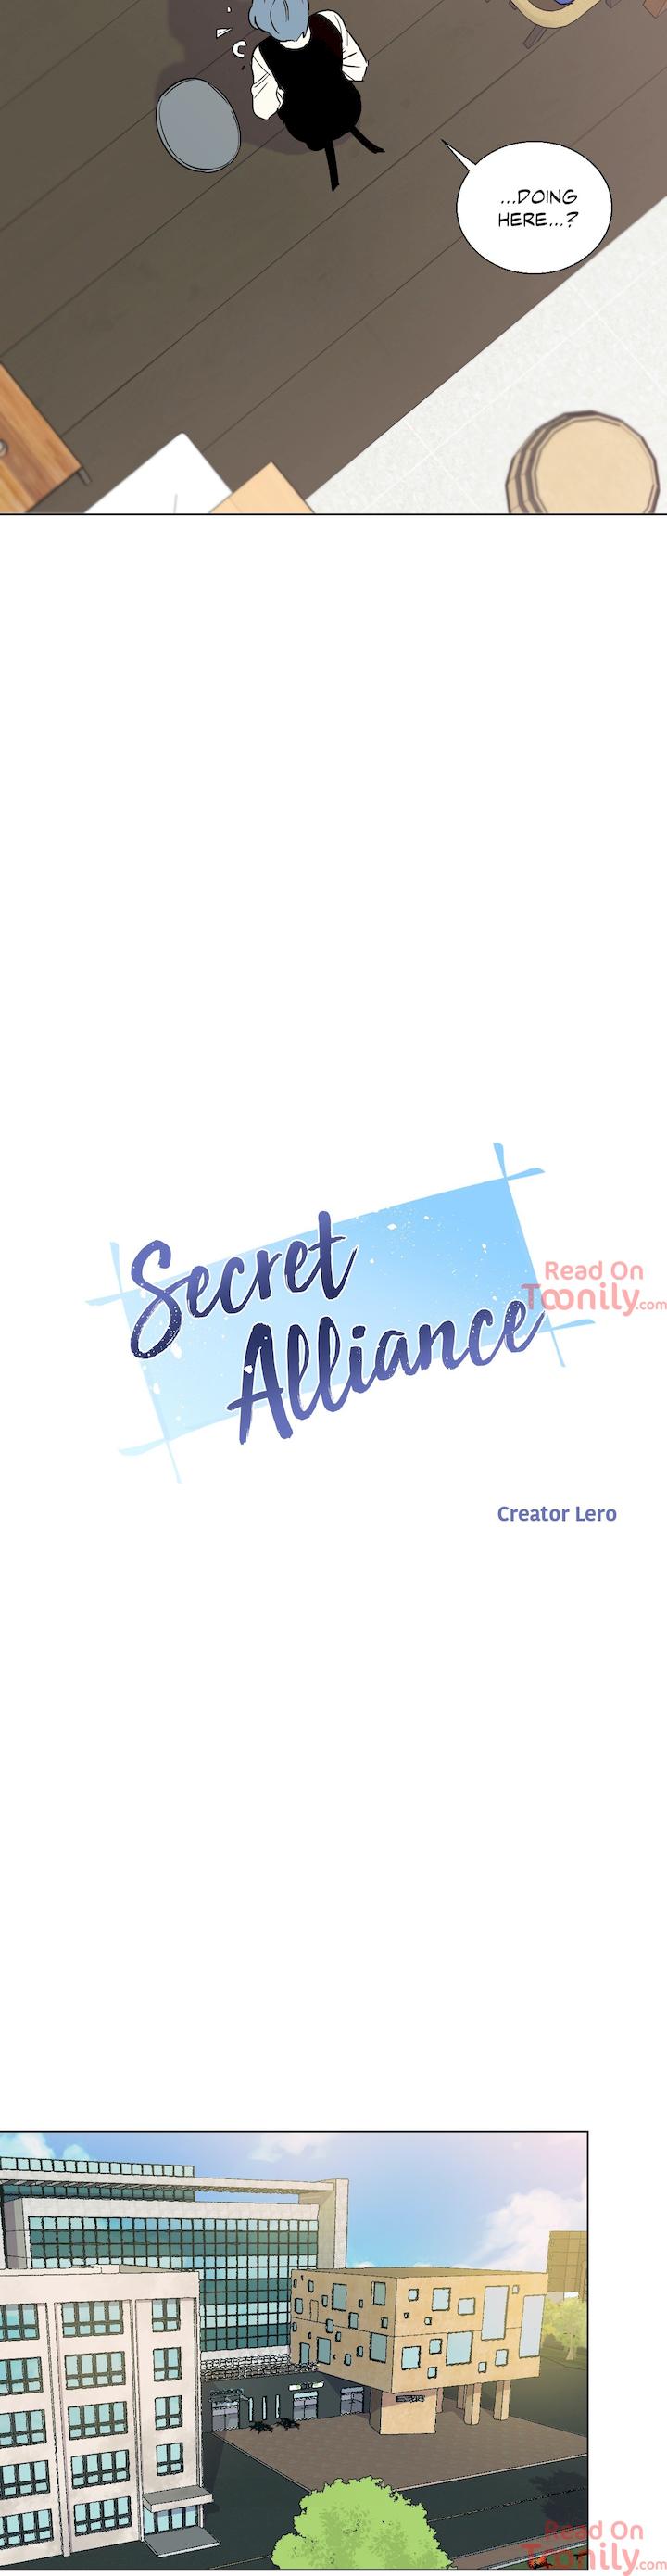 Secret Alliance - Chapter 15 Page 2